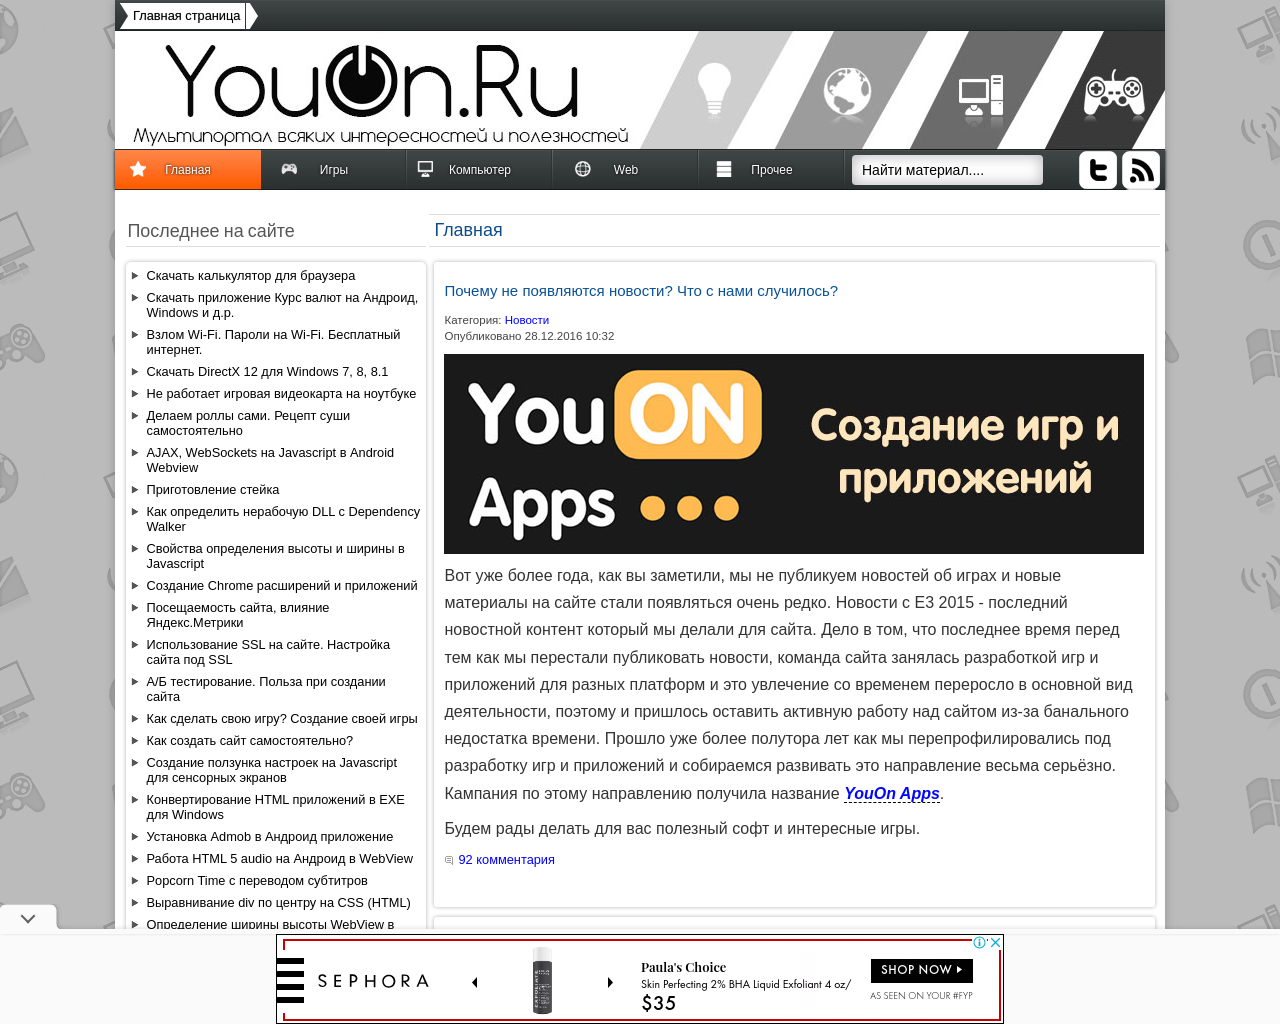 youon.ru